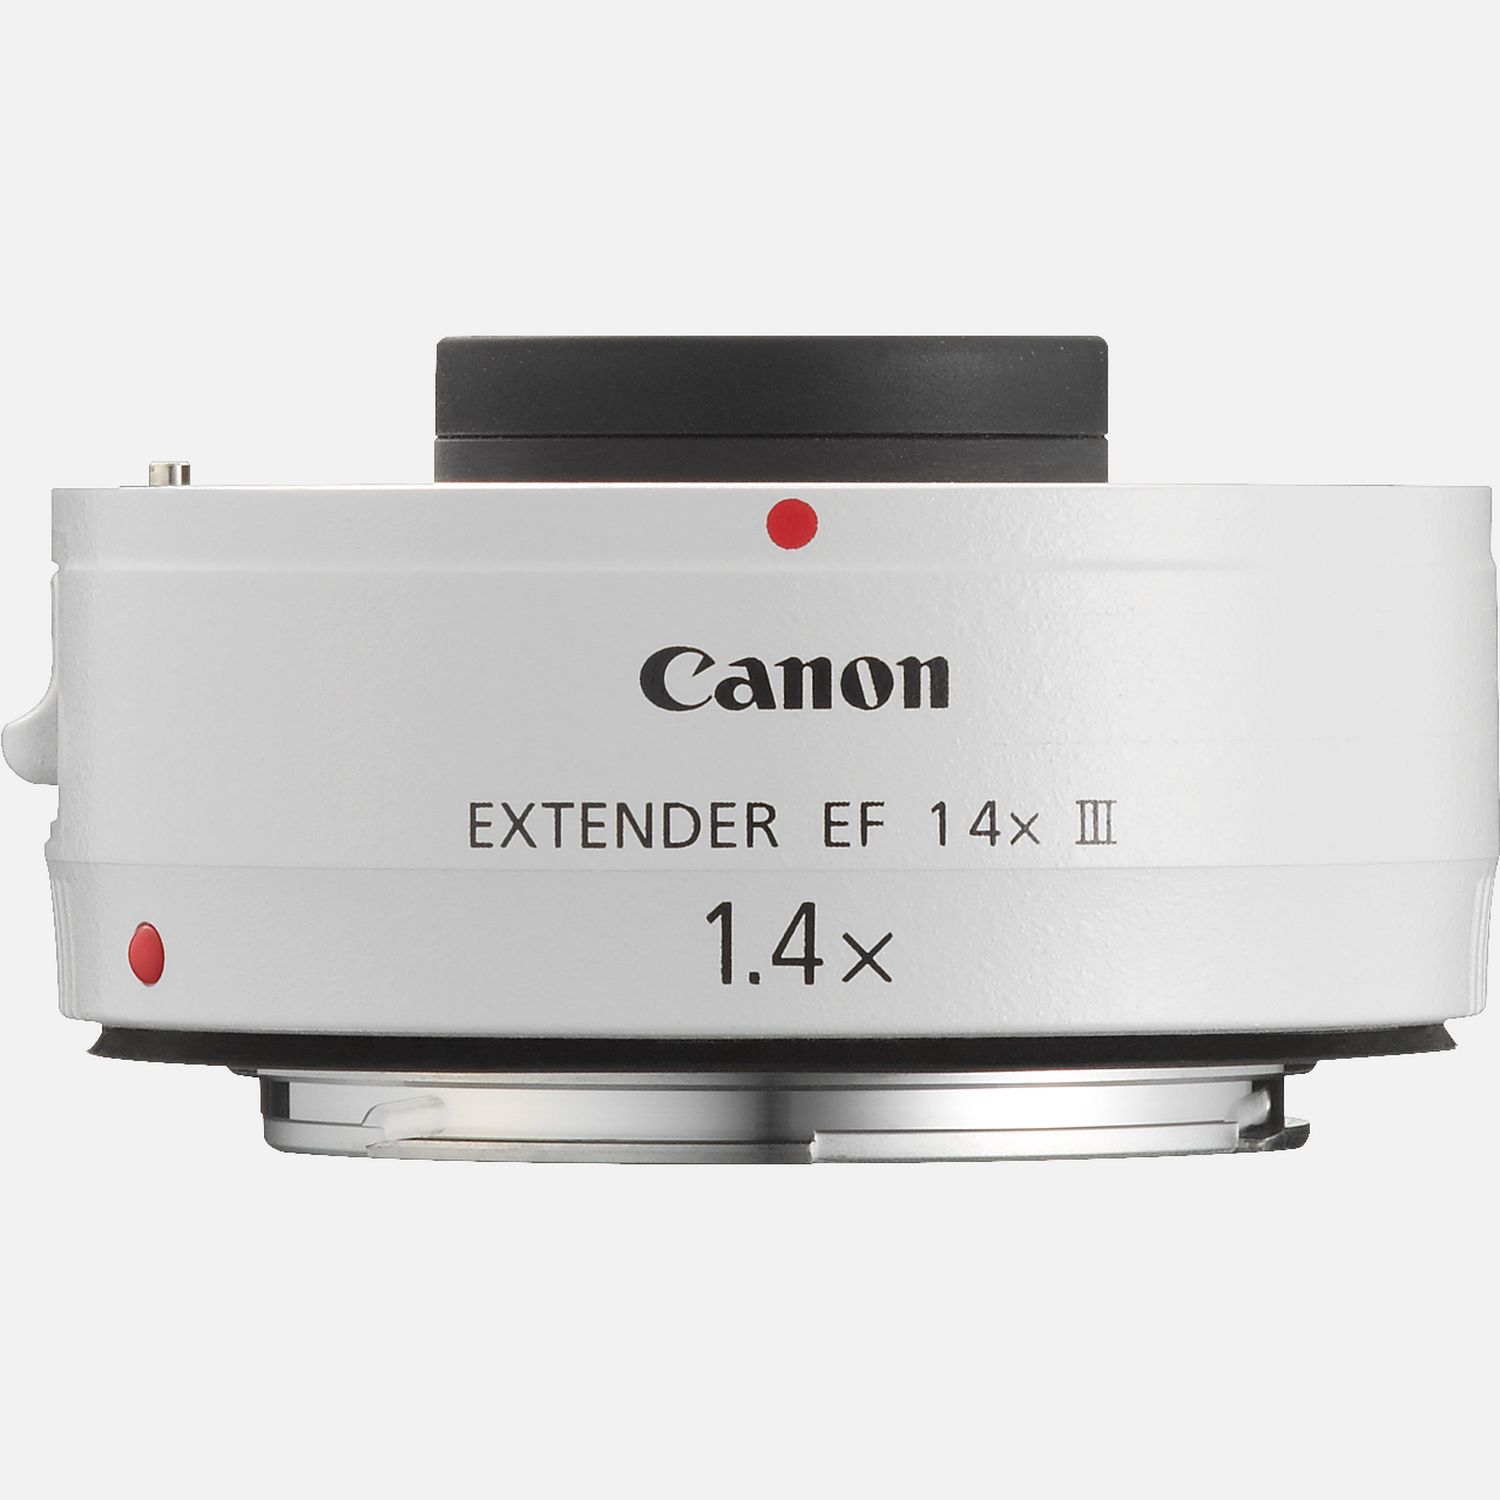 Image of Canon Extender EF 1.4x III